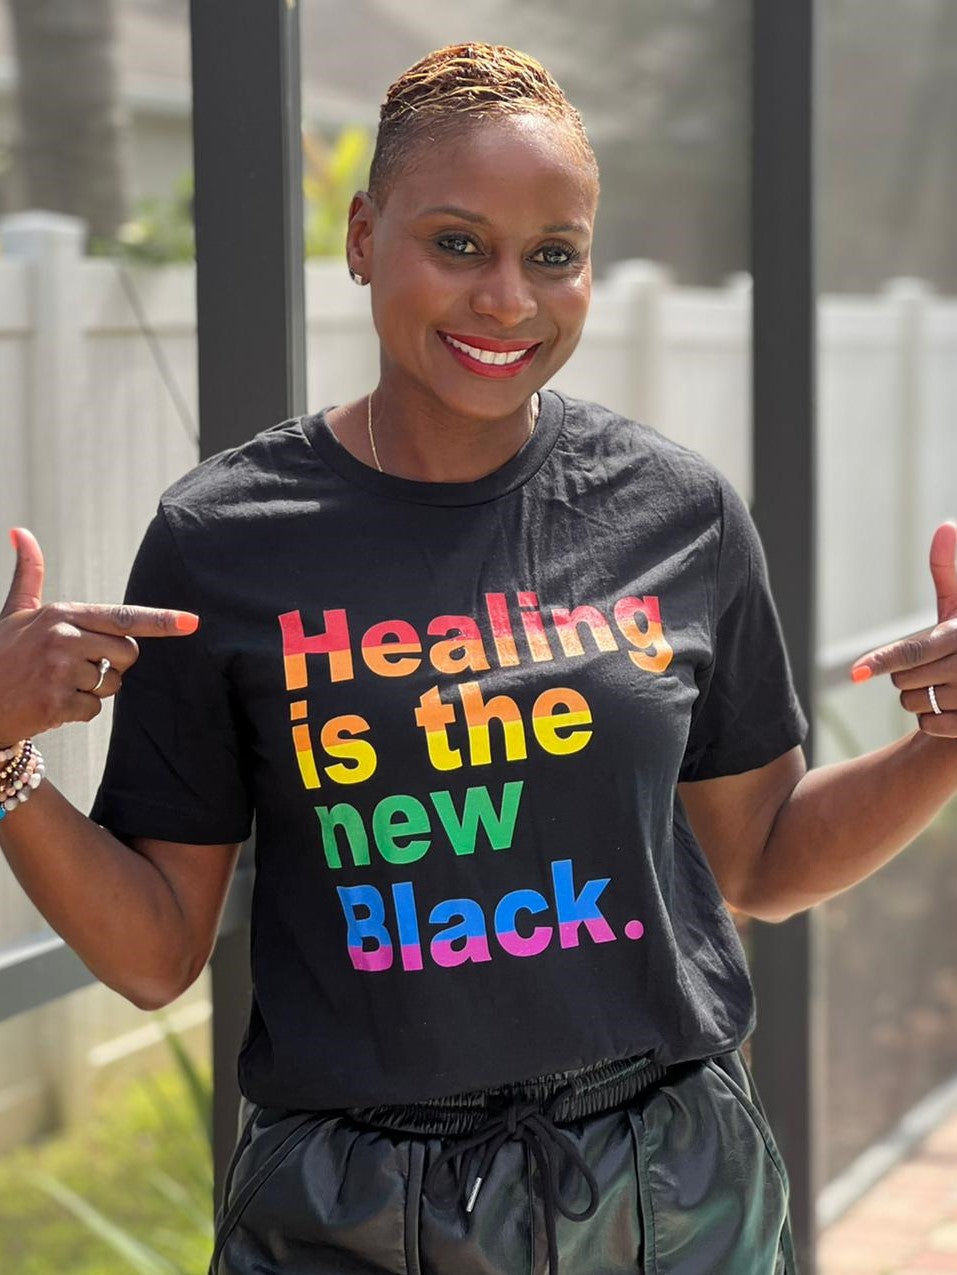 "Healing is the New Black" Tee